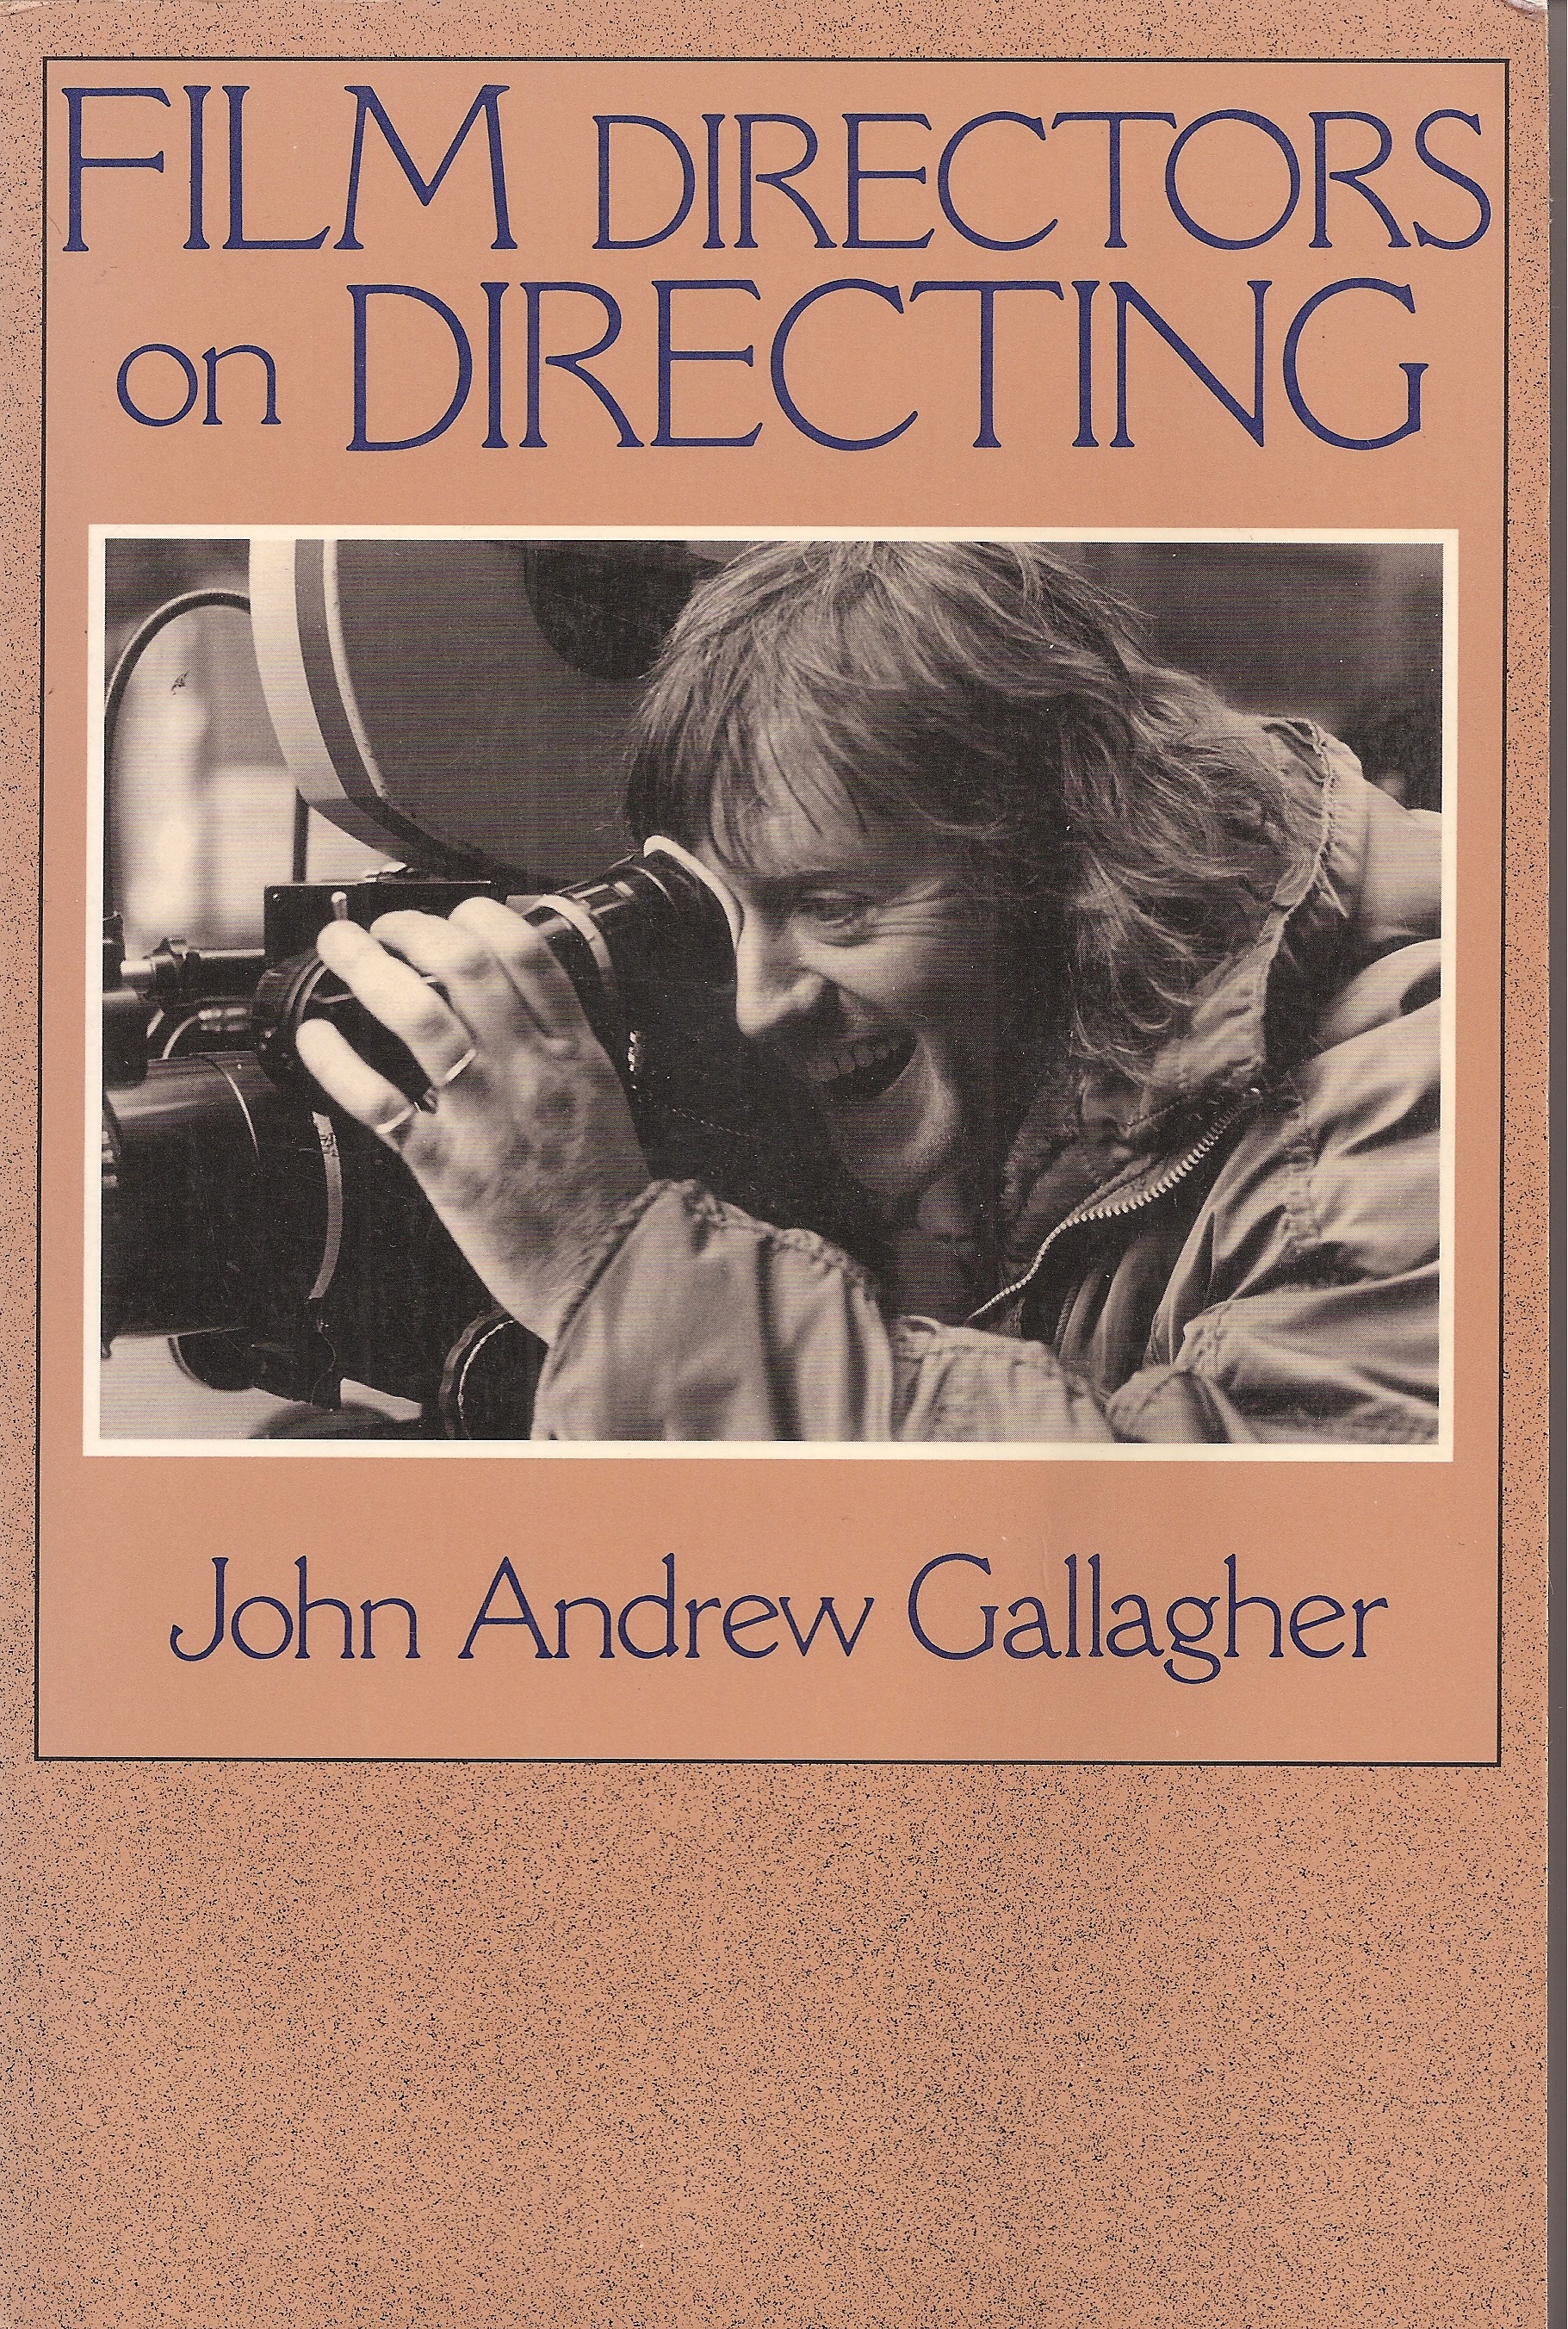 John A. Gallagher